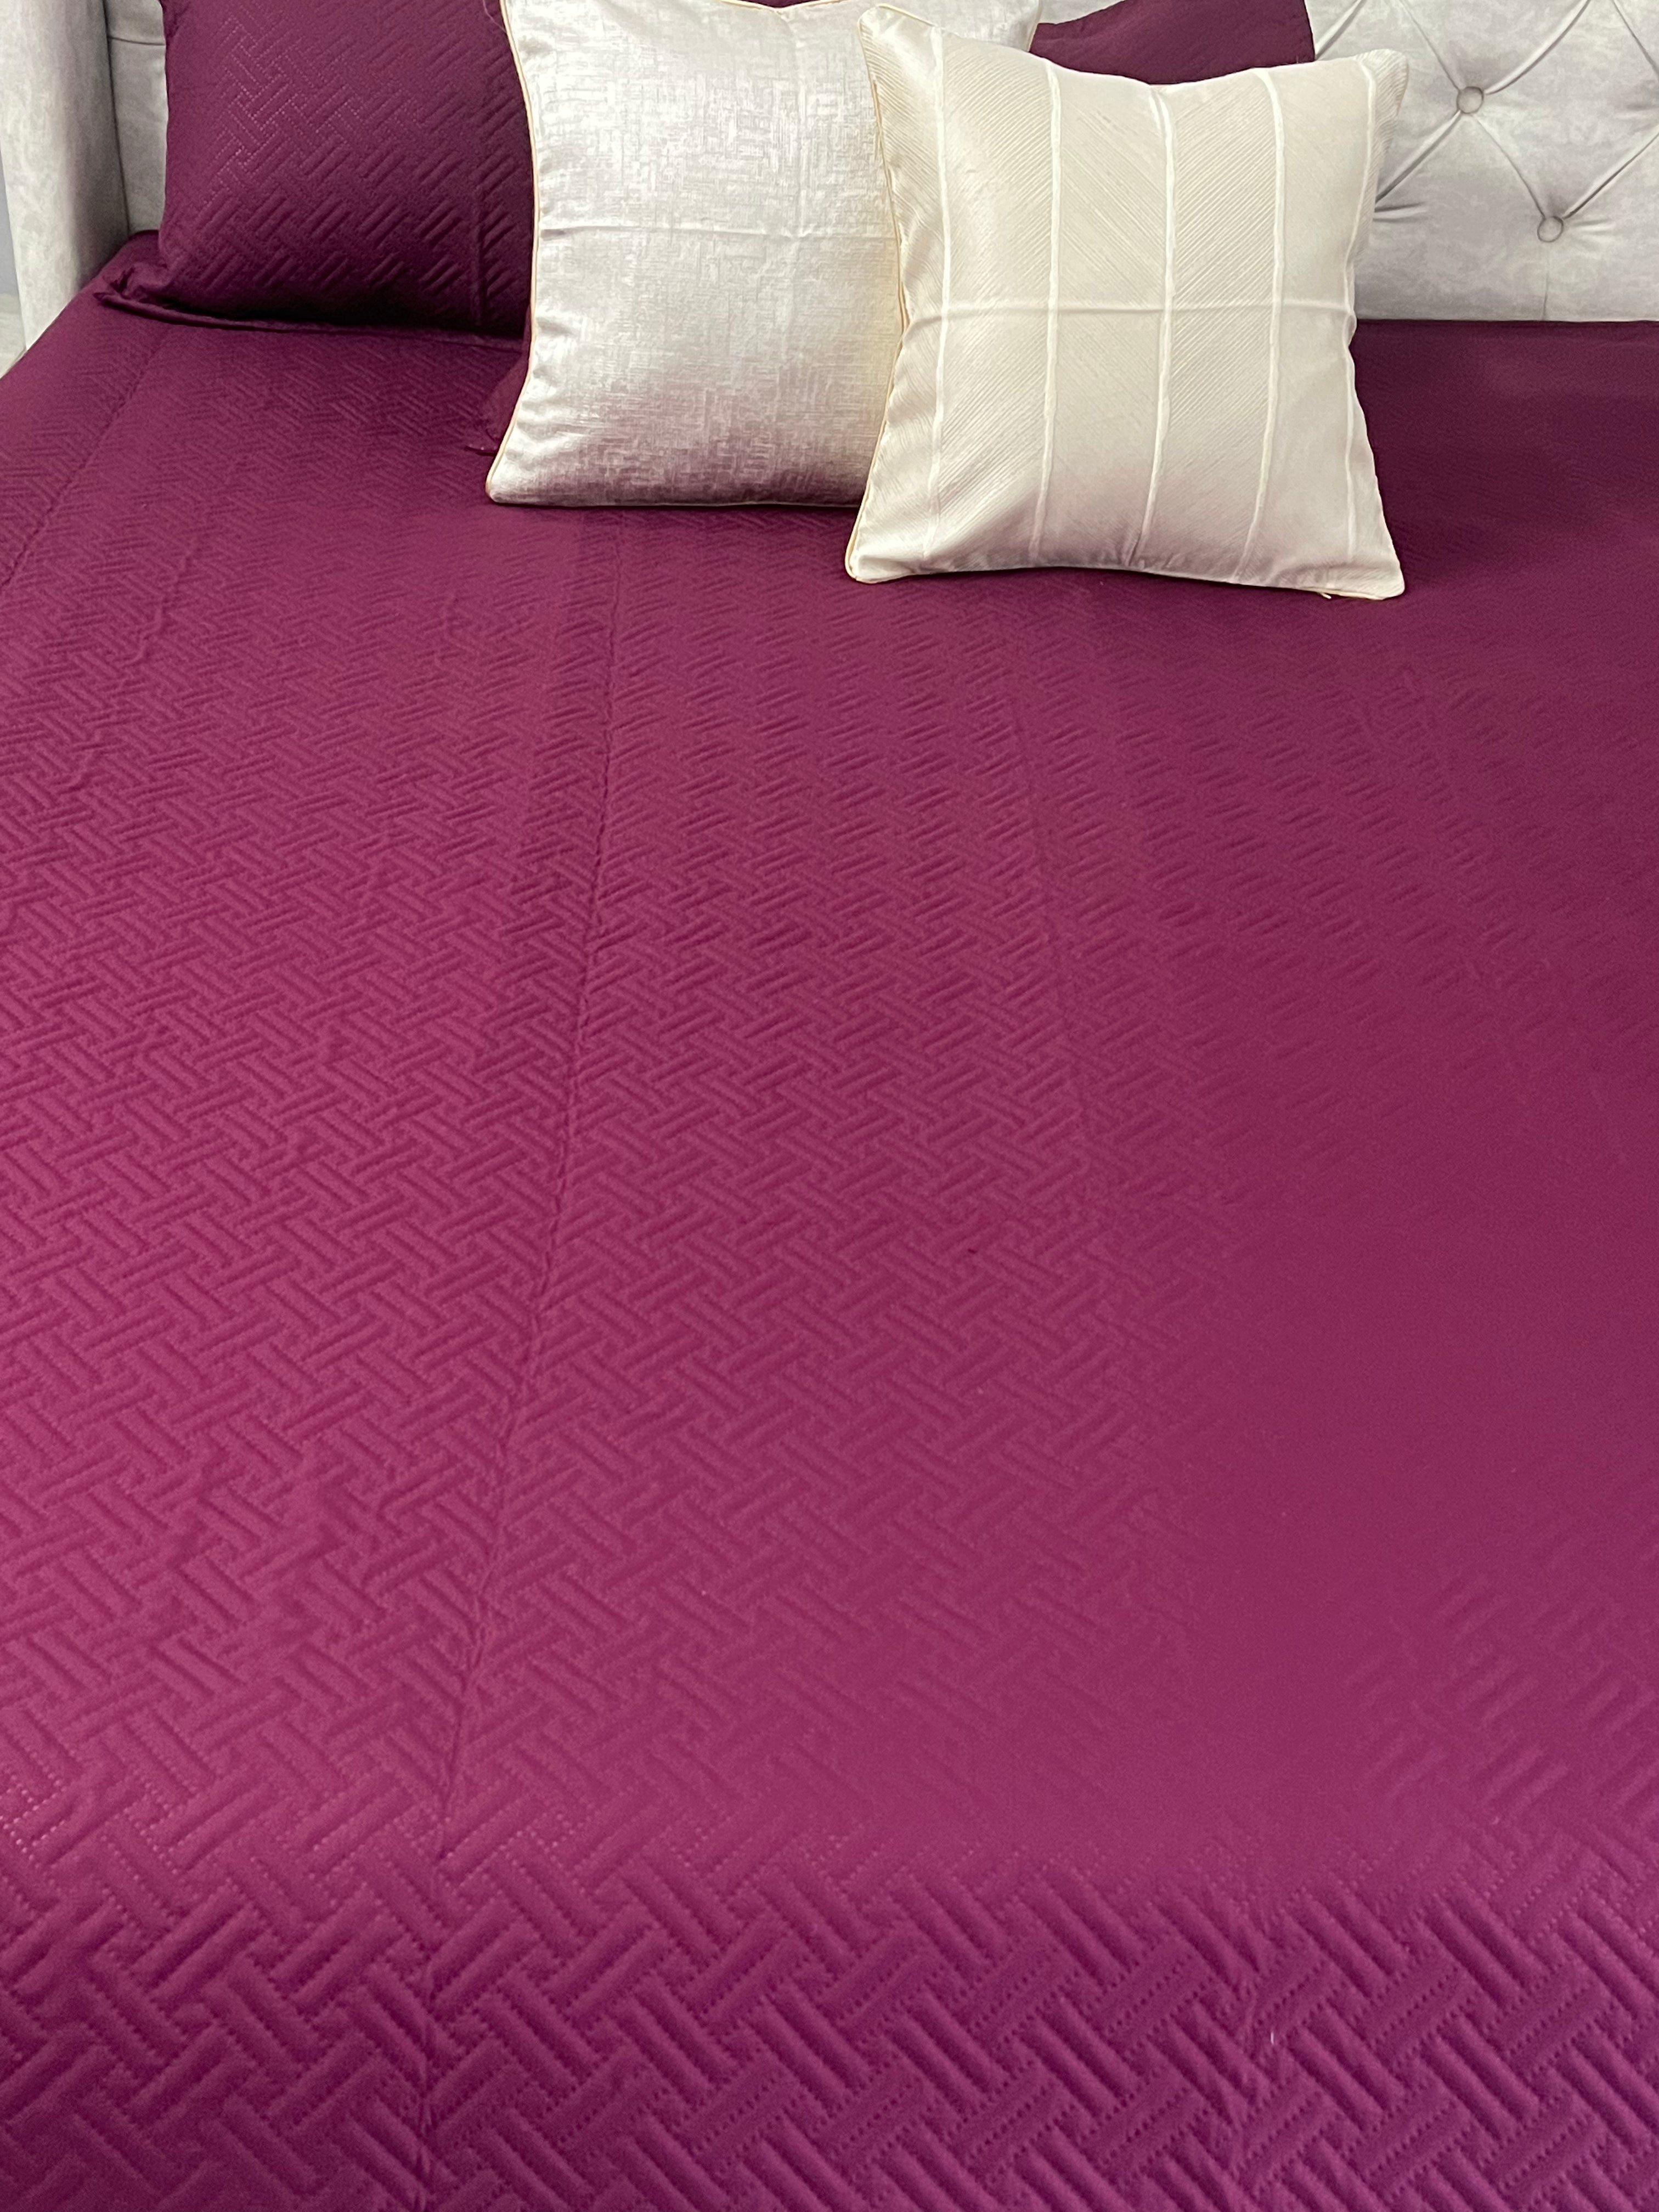 Wine Ultrasonic King Size Bedspread 90x100 Inches